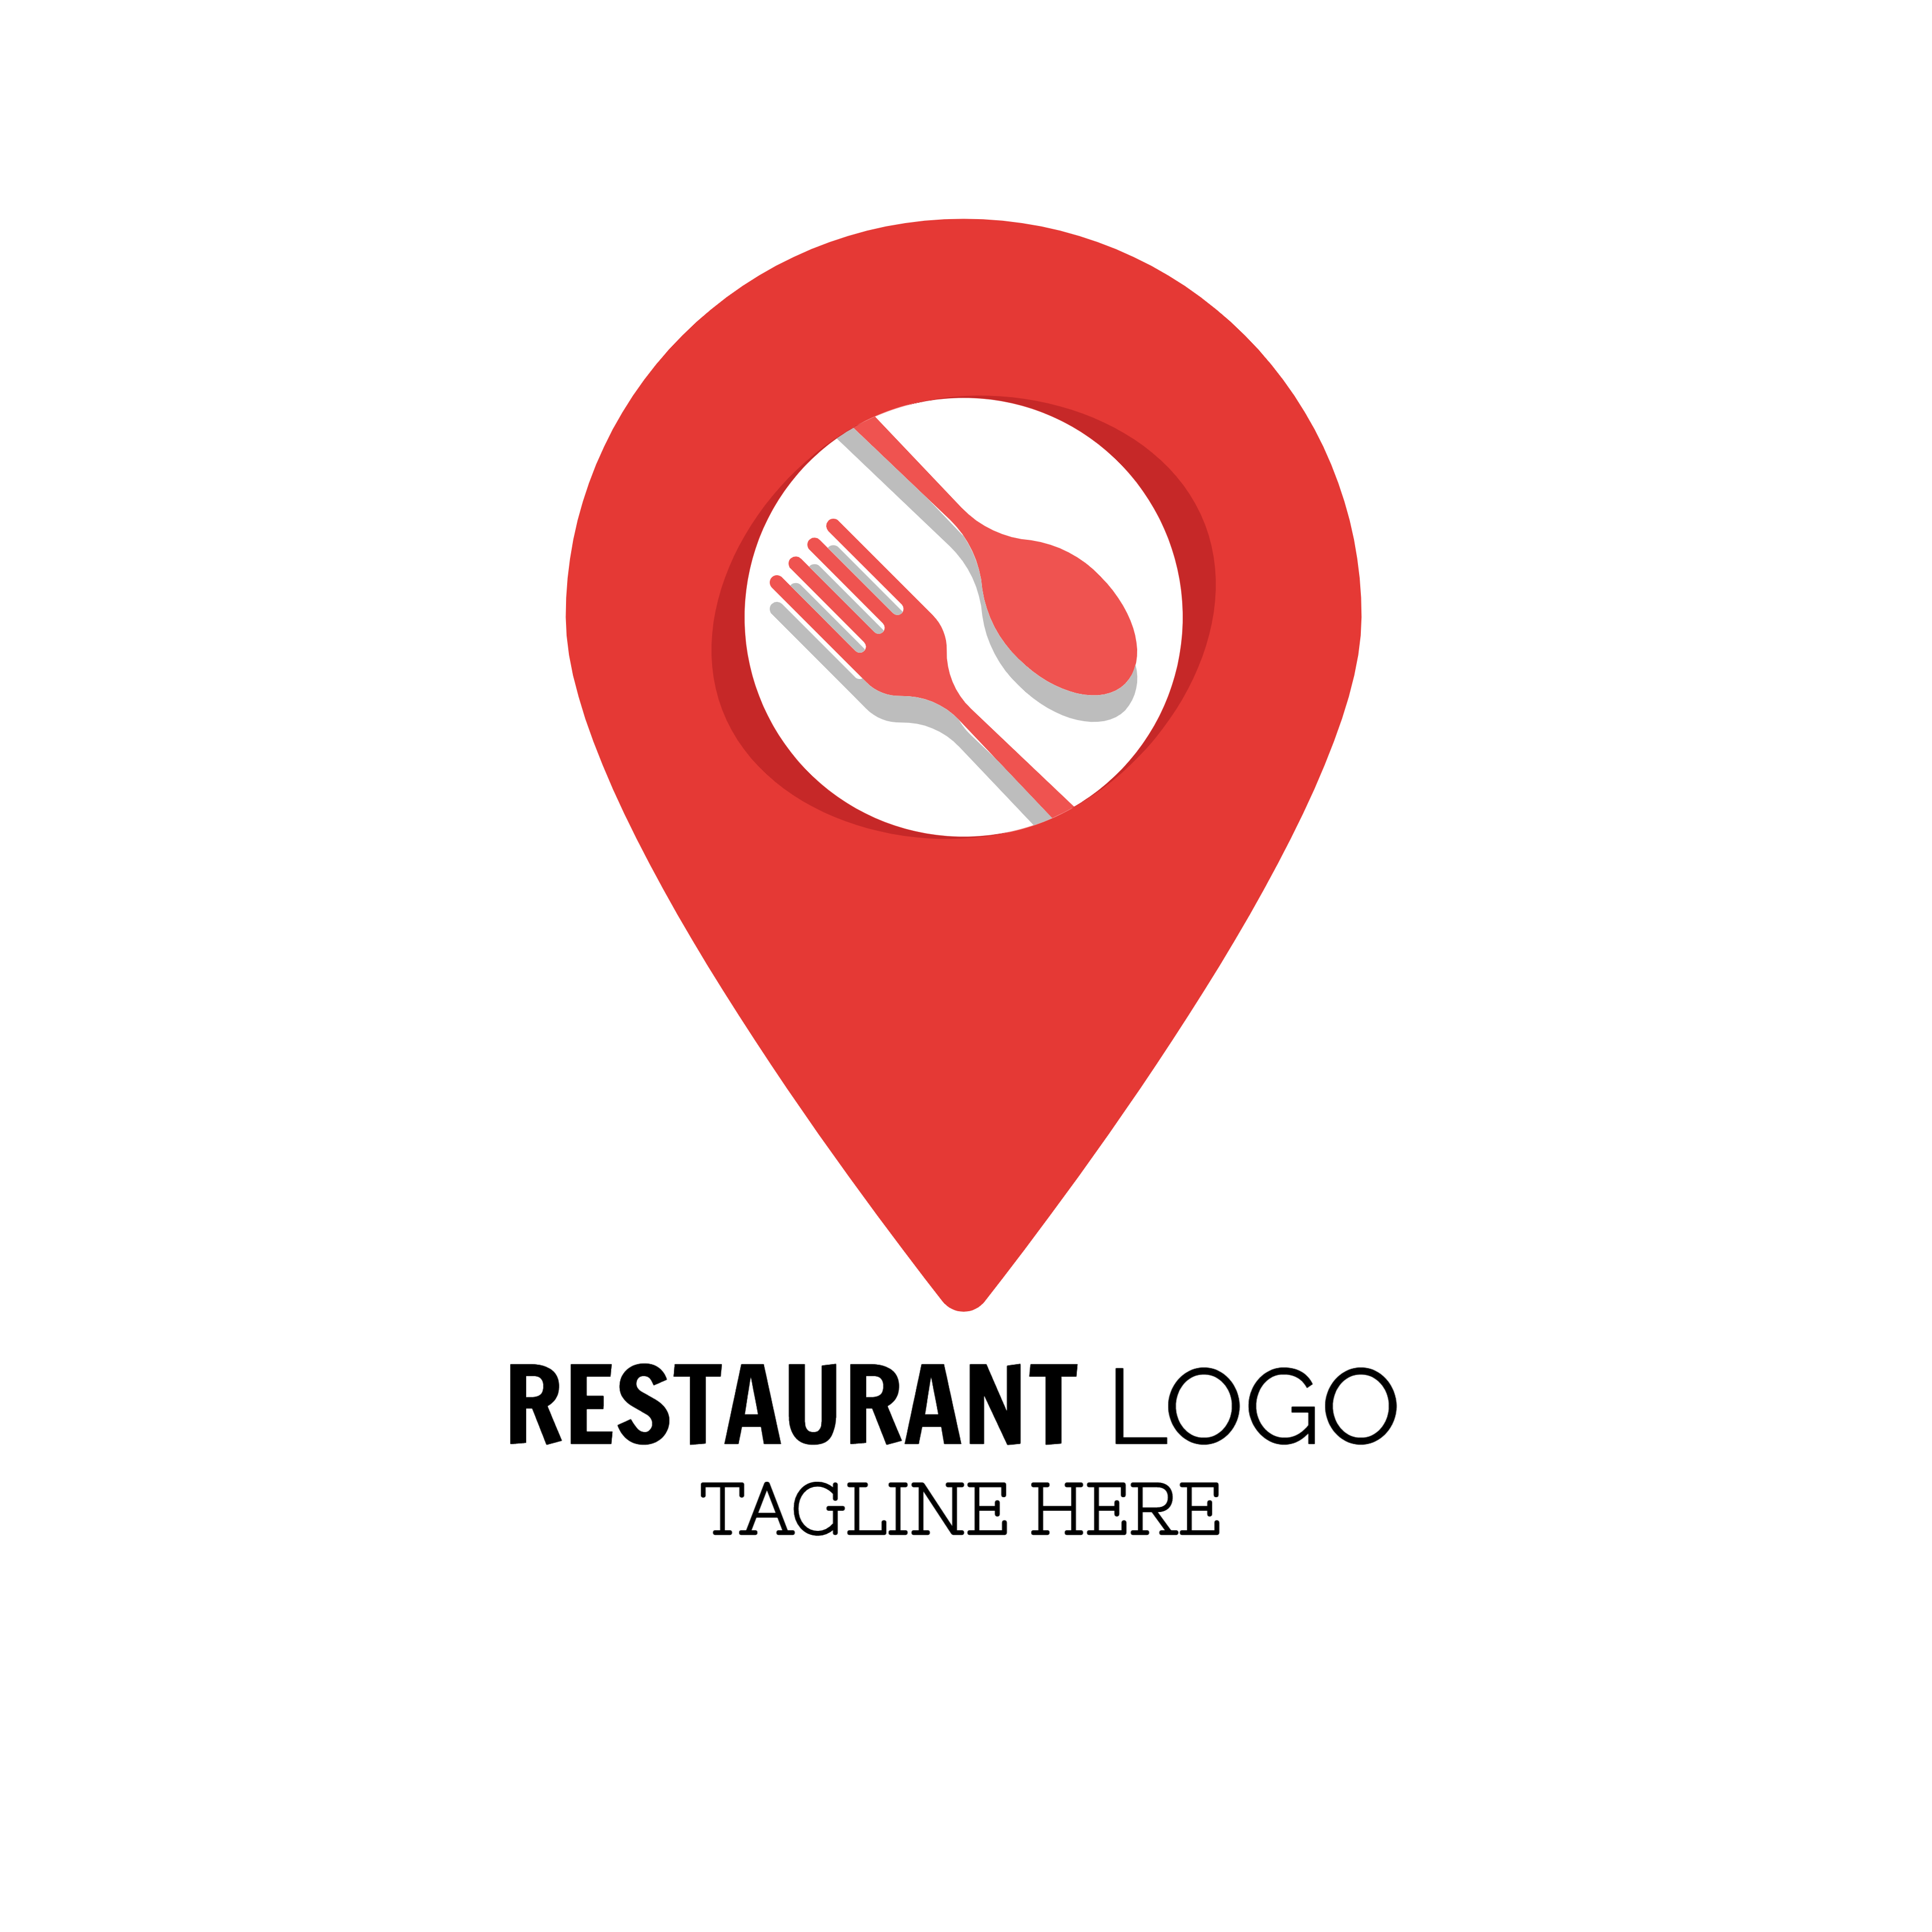 Restarant Logo - Latest Restaurant Food Logo Template | Free Digital Designs On Bk ...